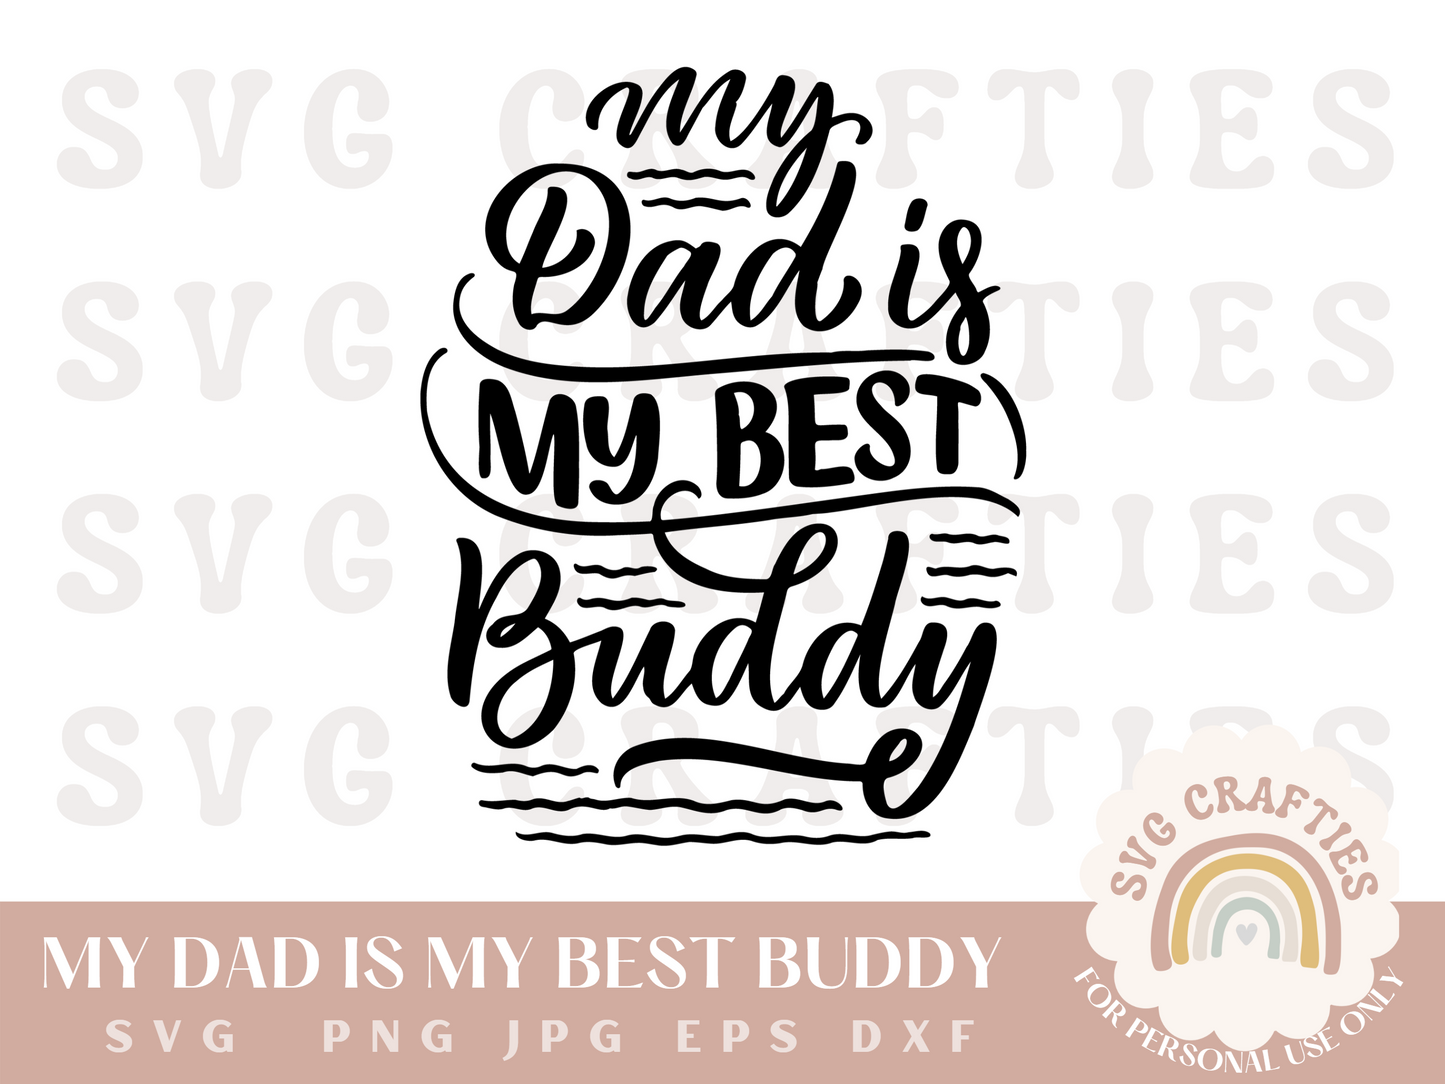 My Dad is My Best Buddy Free SVG Download